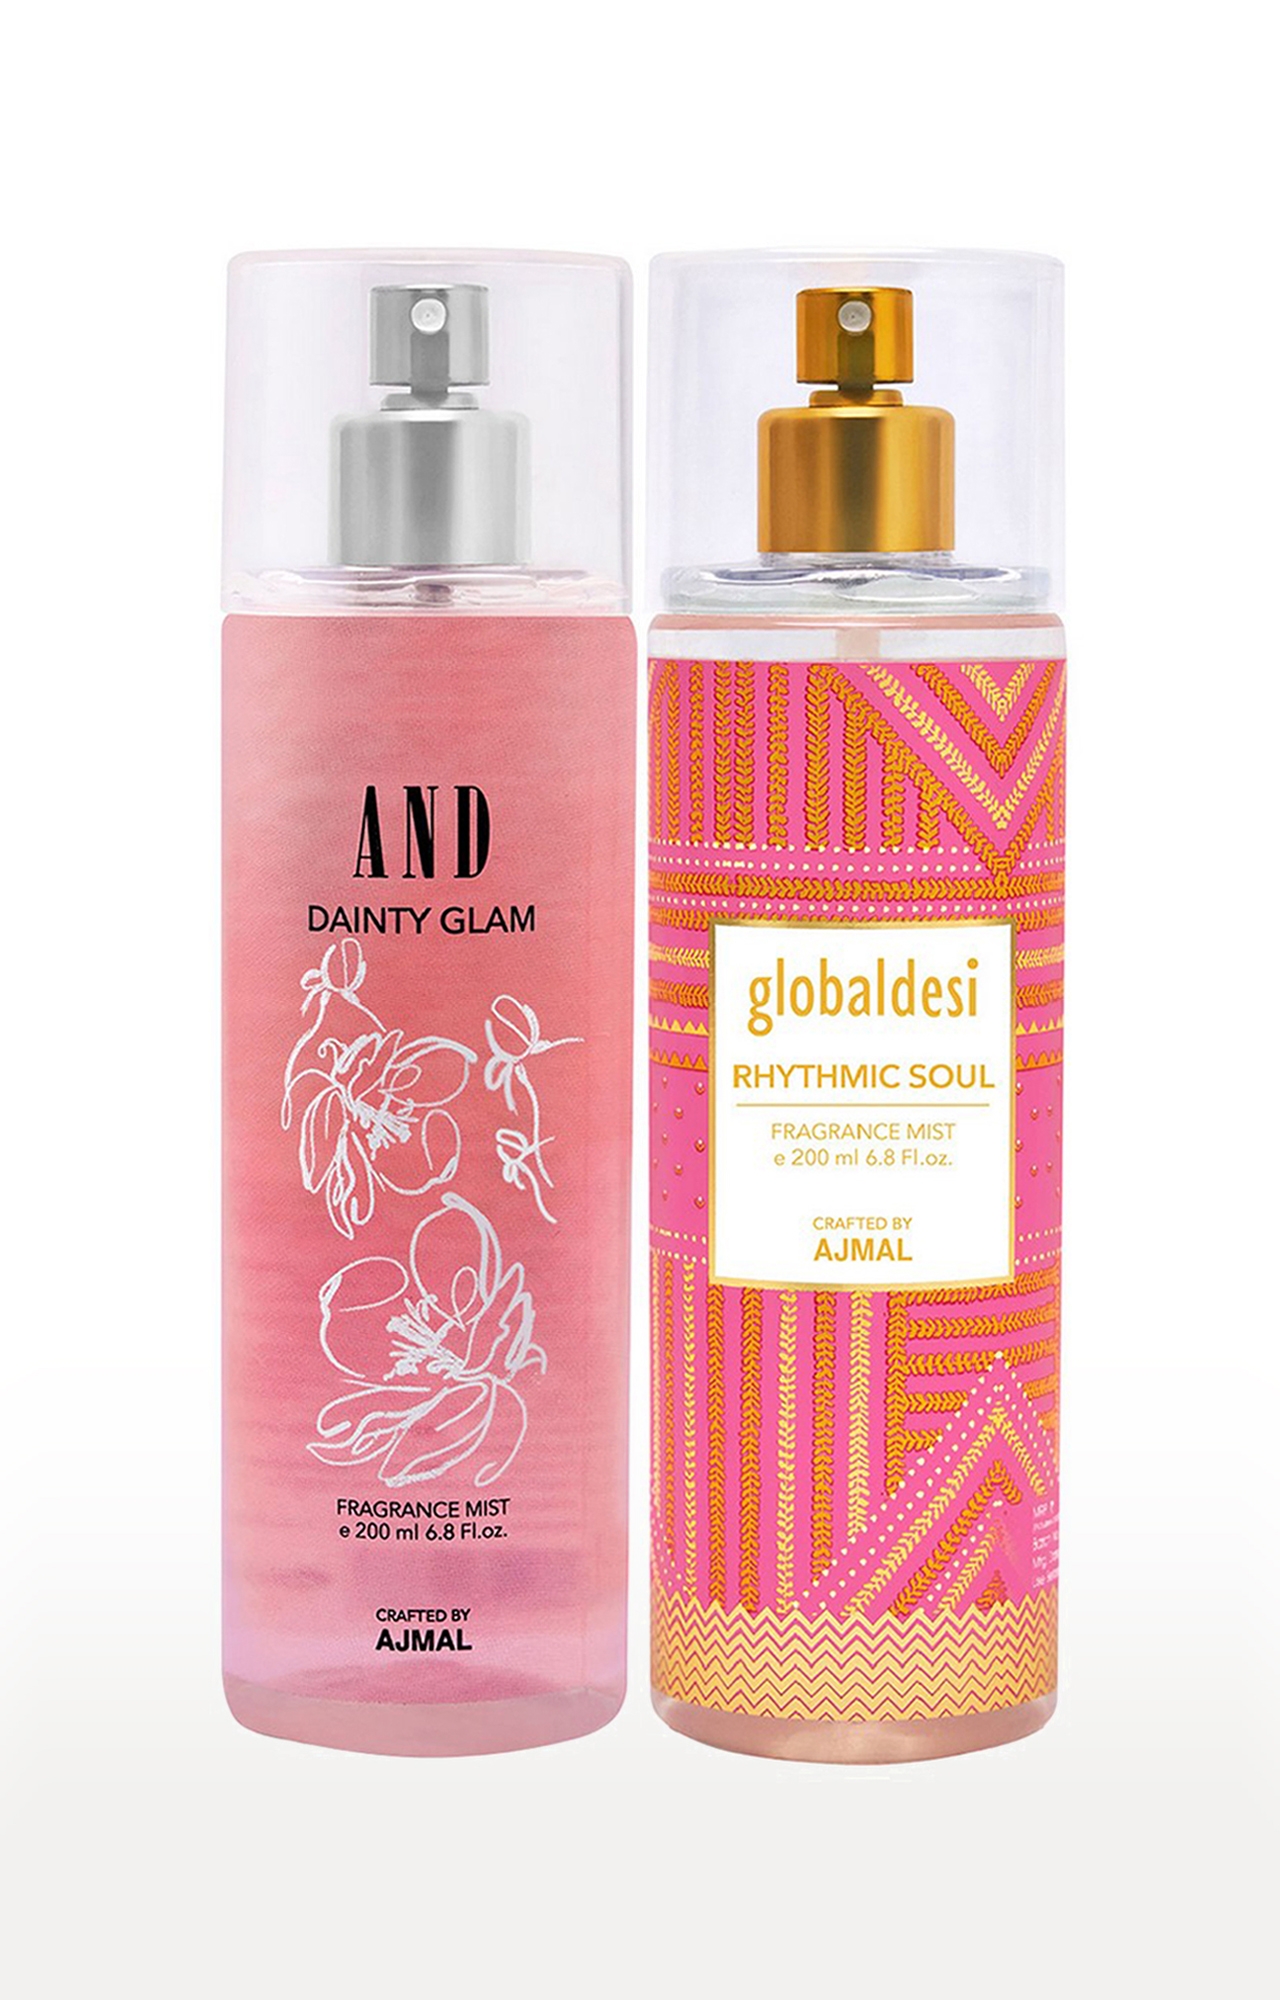 AND Dainty Glam Body Mist 200ML & Global Desi Rhythmic Soul Body Mist 200ML Long Lasting Scent Spray Gift For Women Perfume FREE